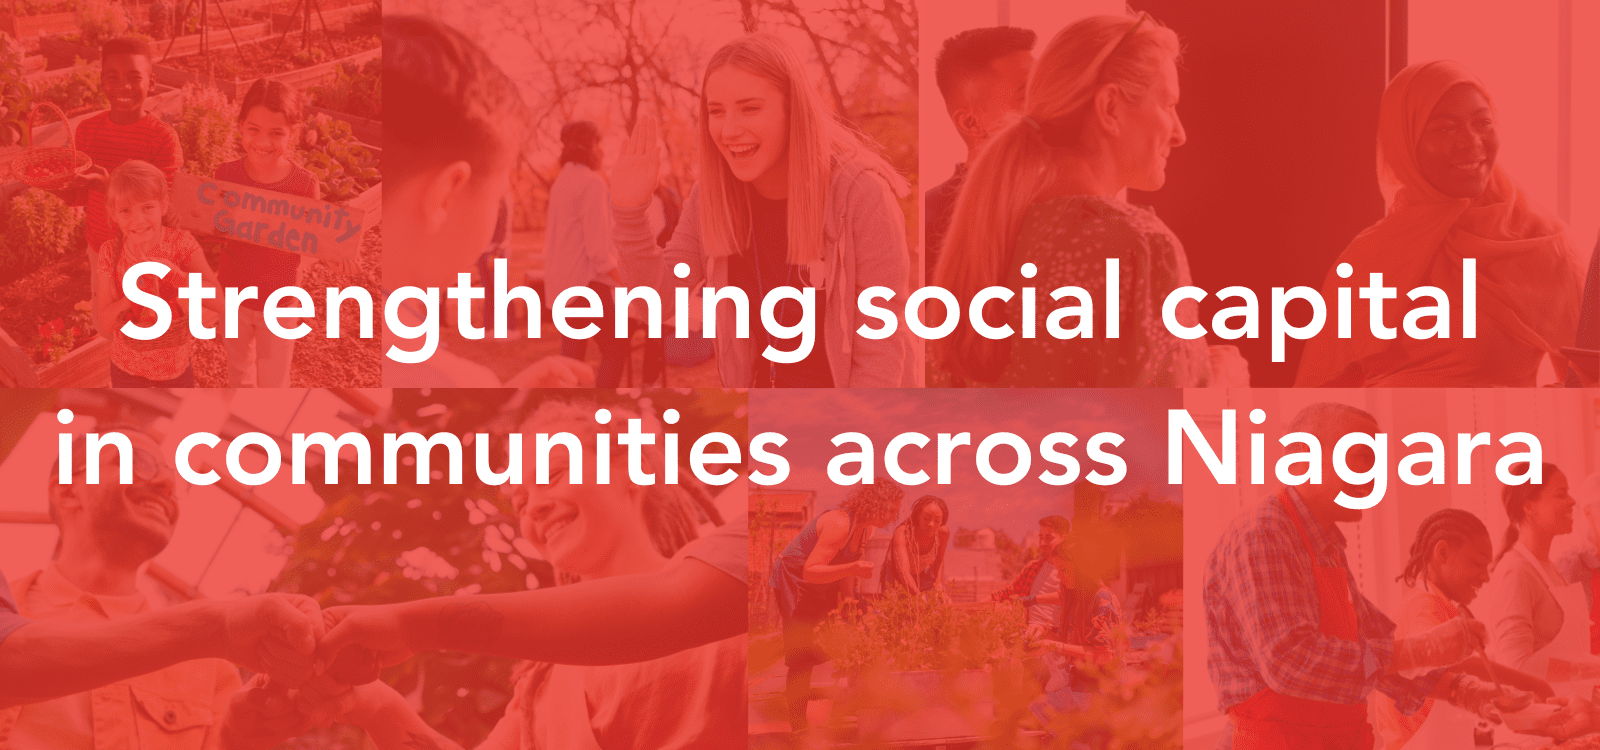 Strengthening social capital in communities across Niagara